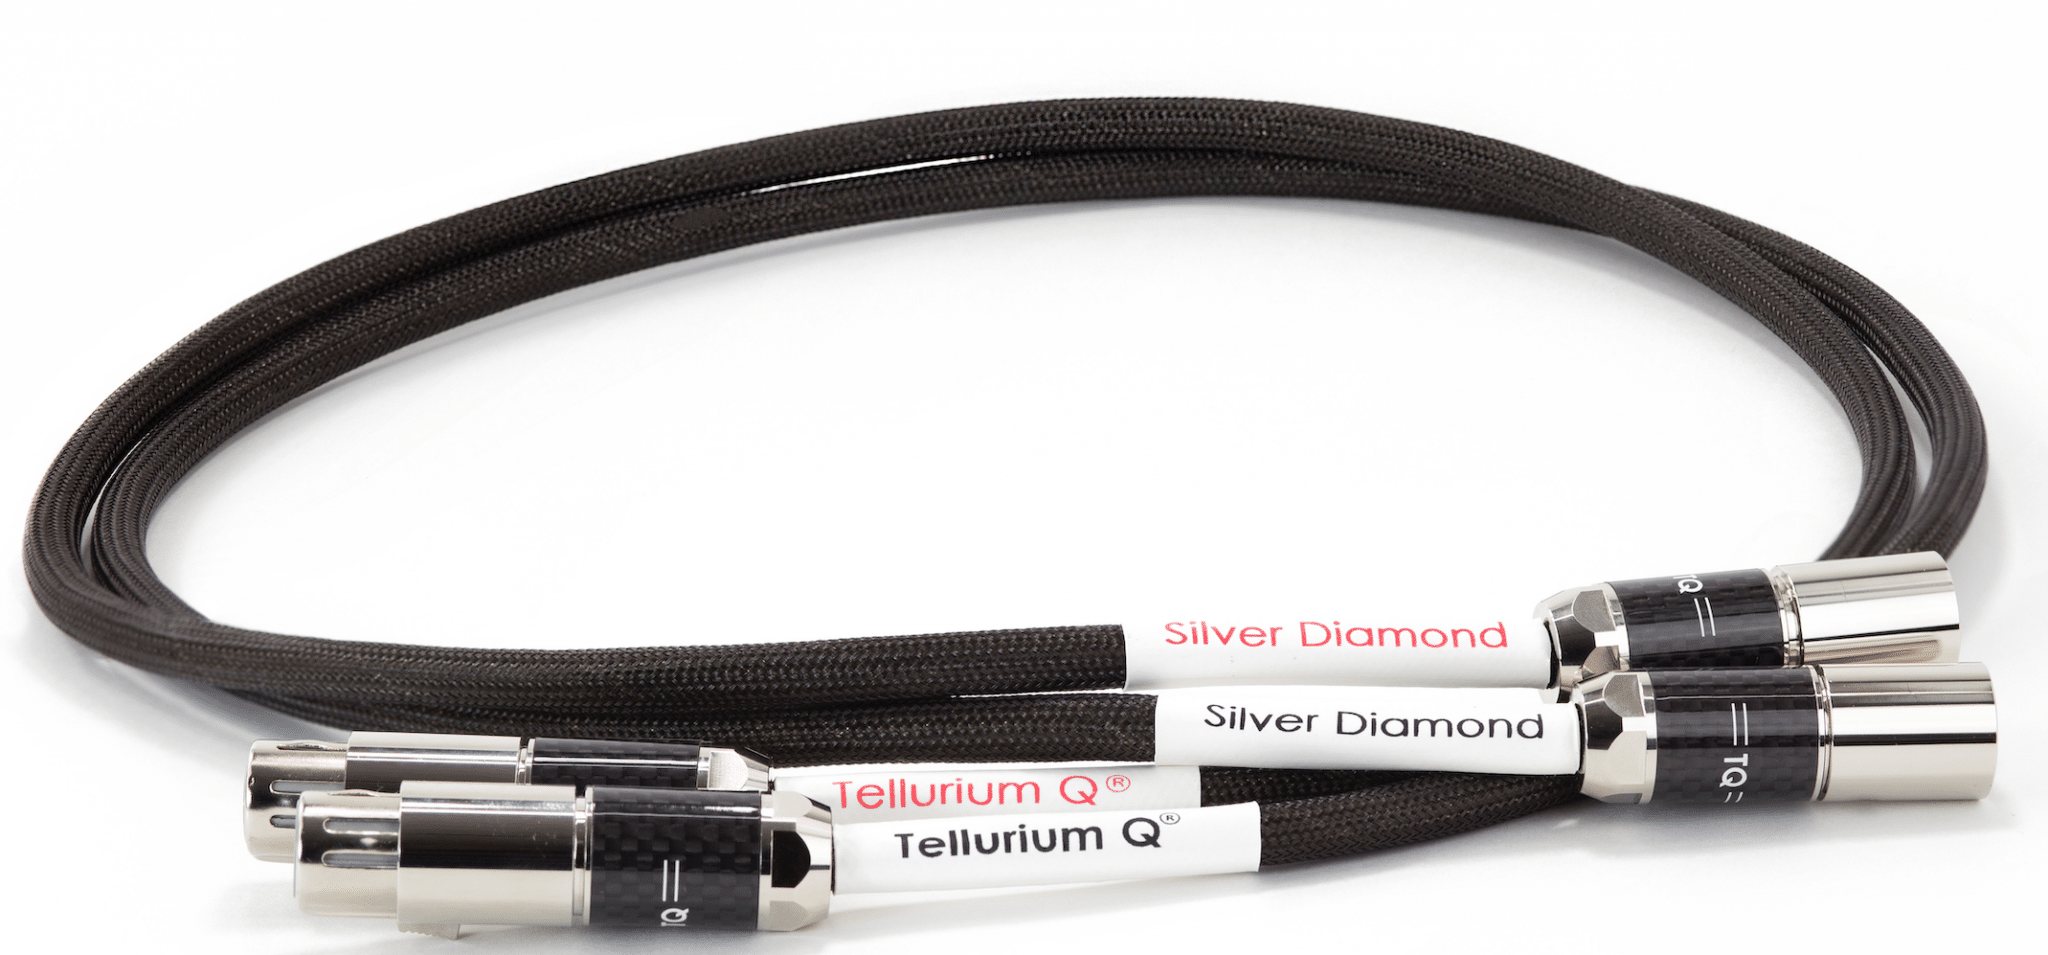 Silver Diamond Cables From Tellurium Q